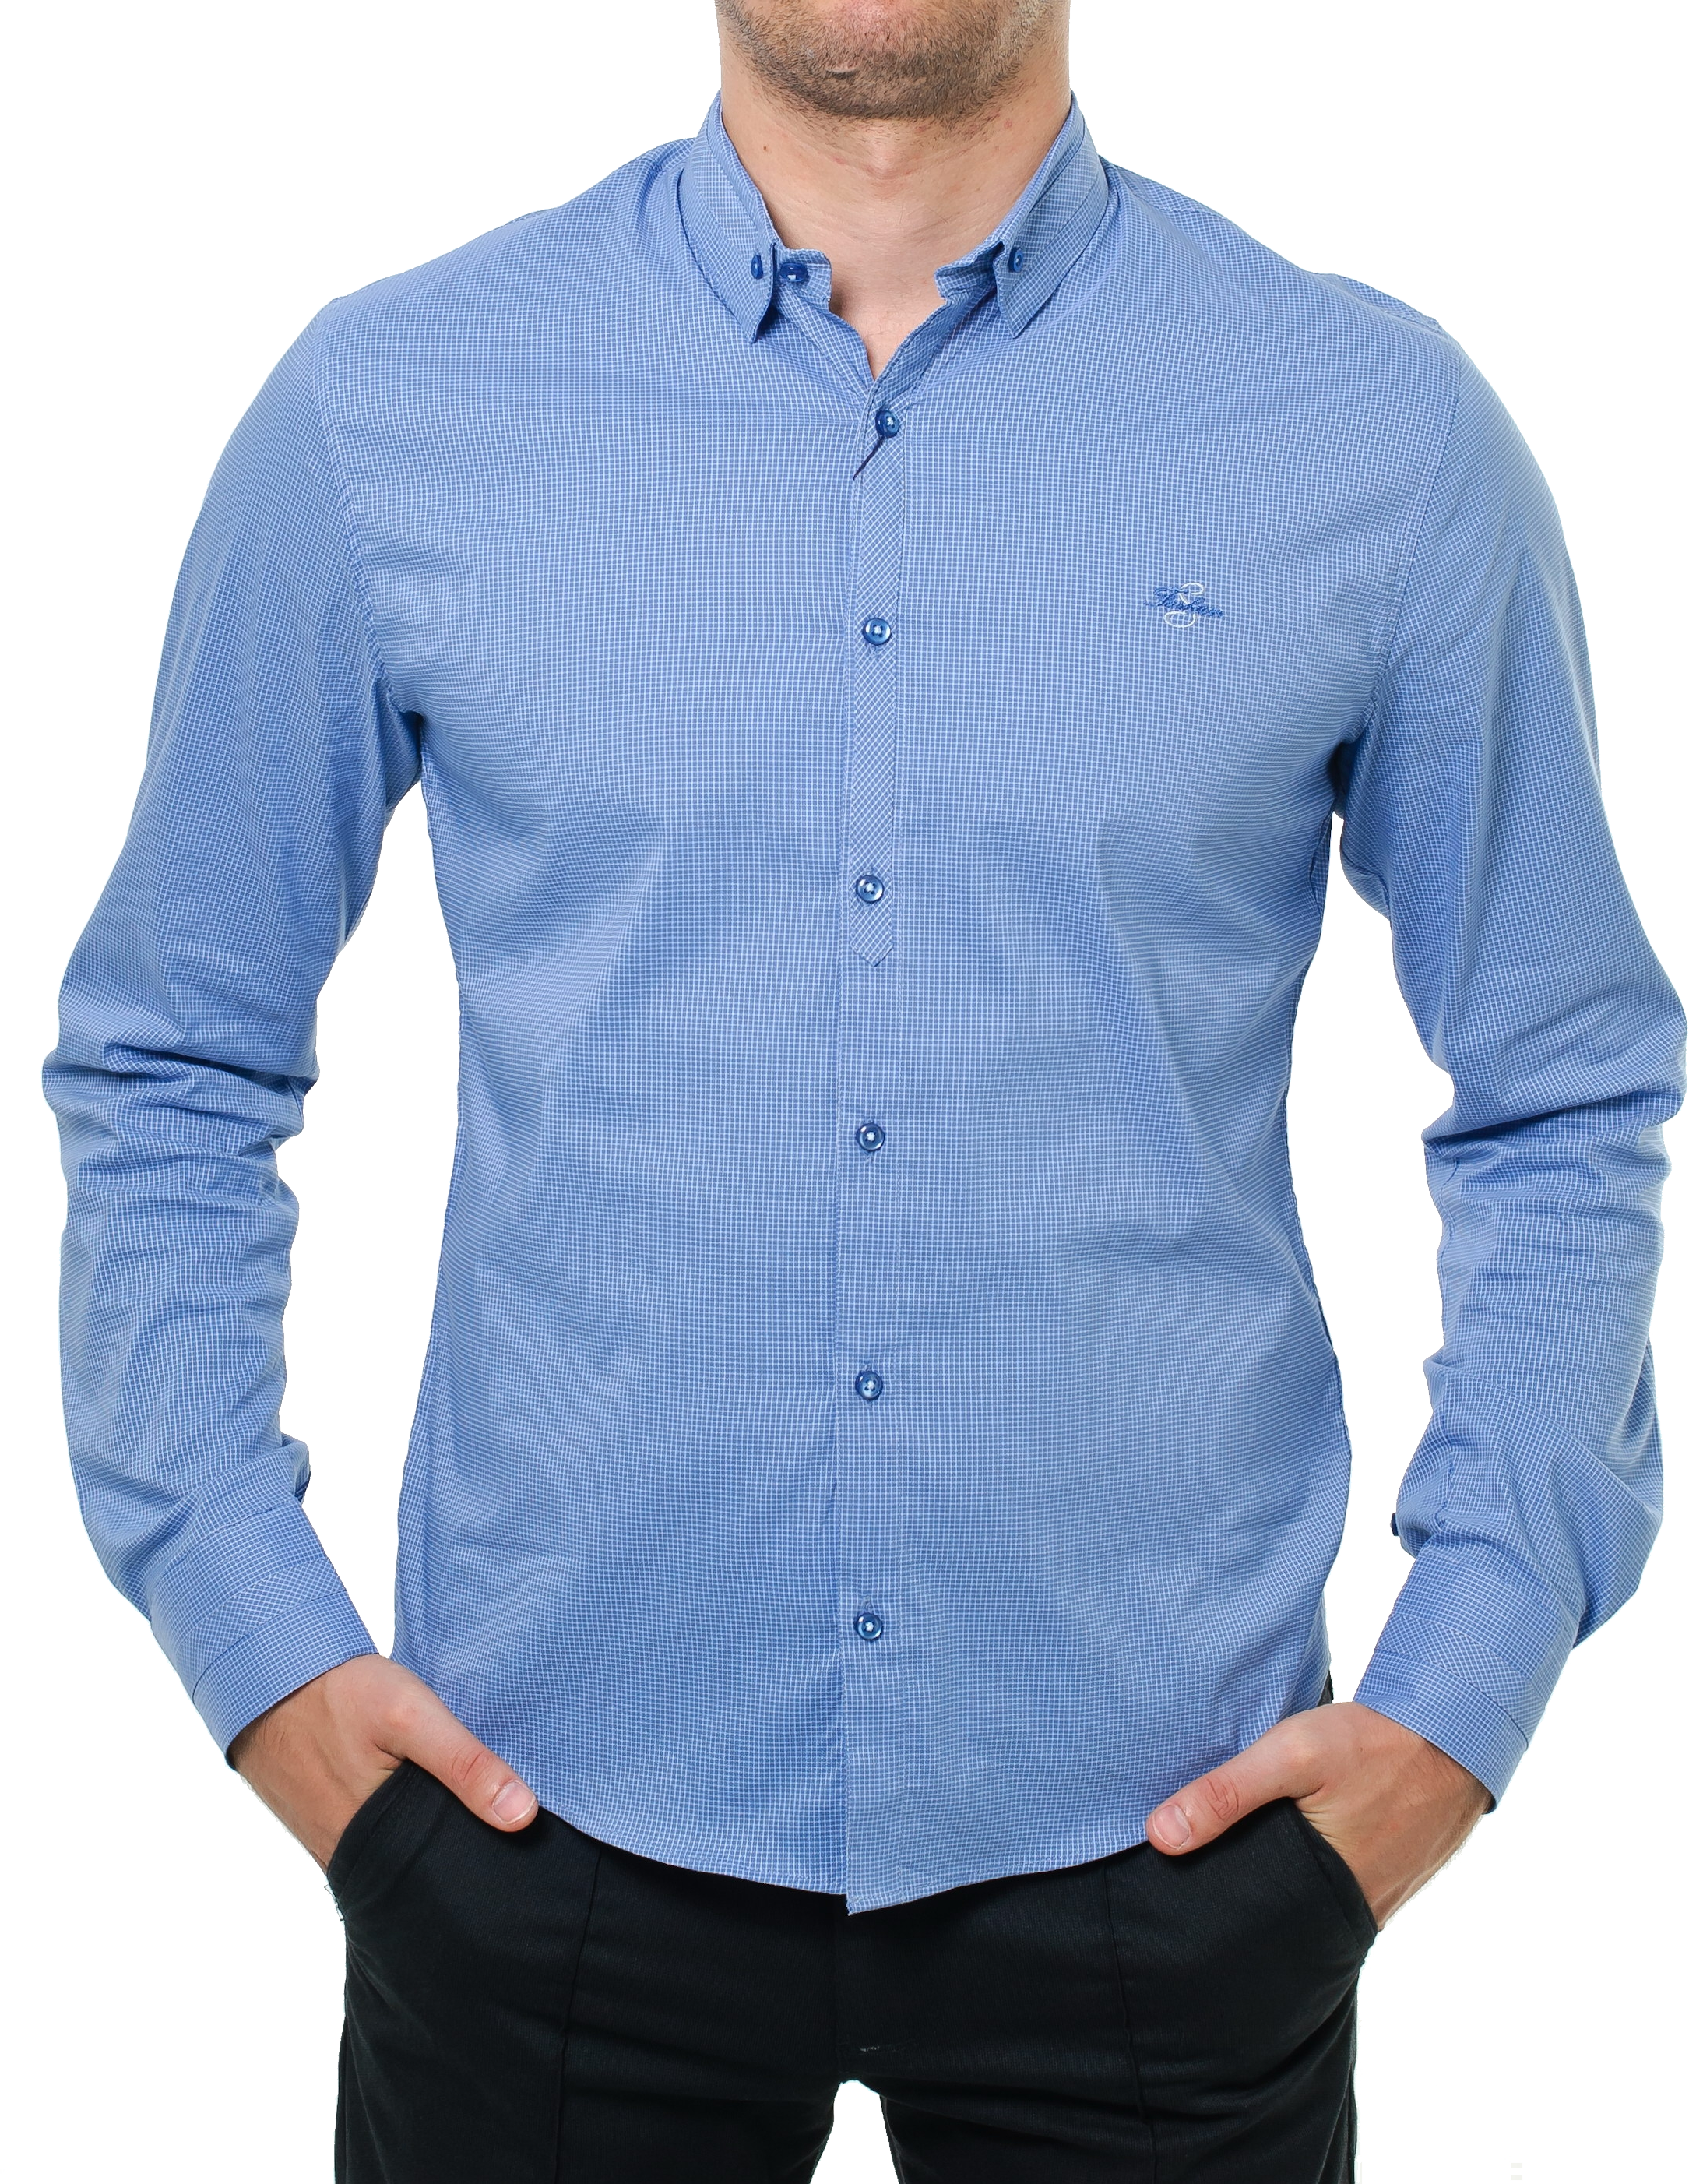 Blue long sleeve png. Shirts clipart button up shirt